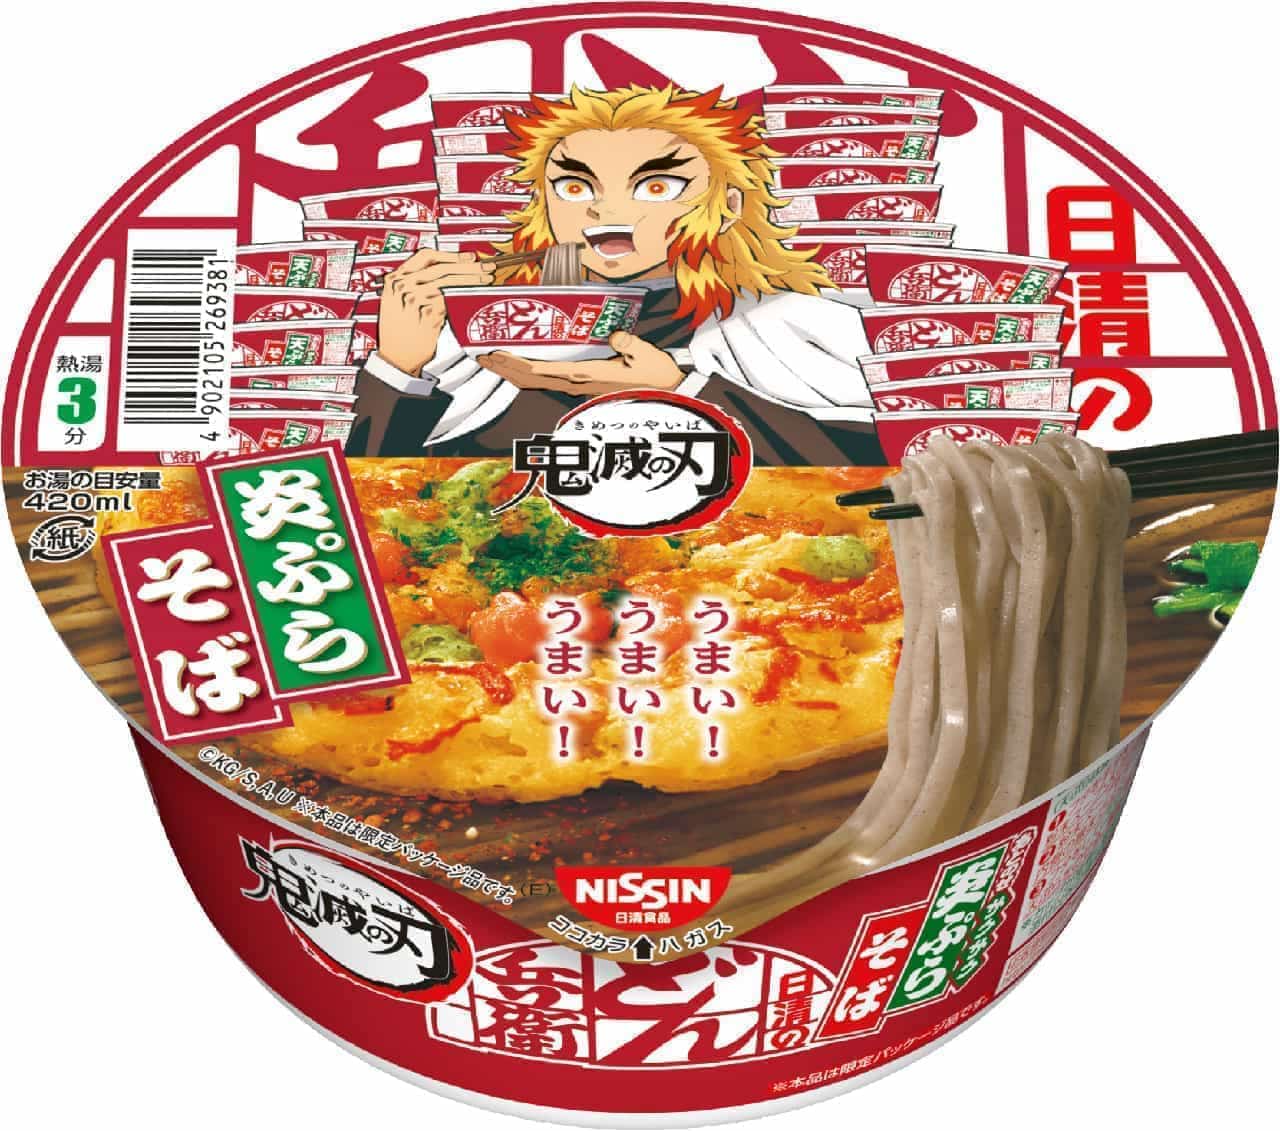 Nissin Foods "Nissin Donbei Tempura Soba Devil's Blade Package"